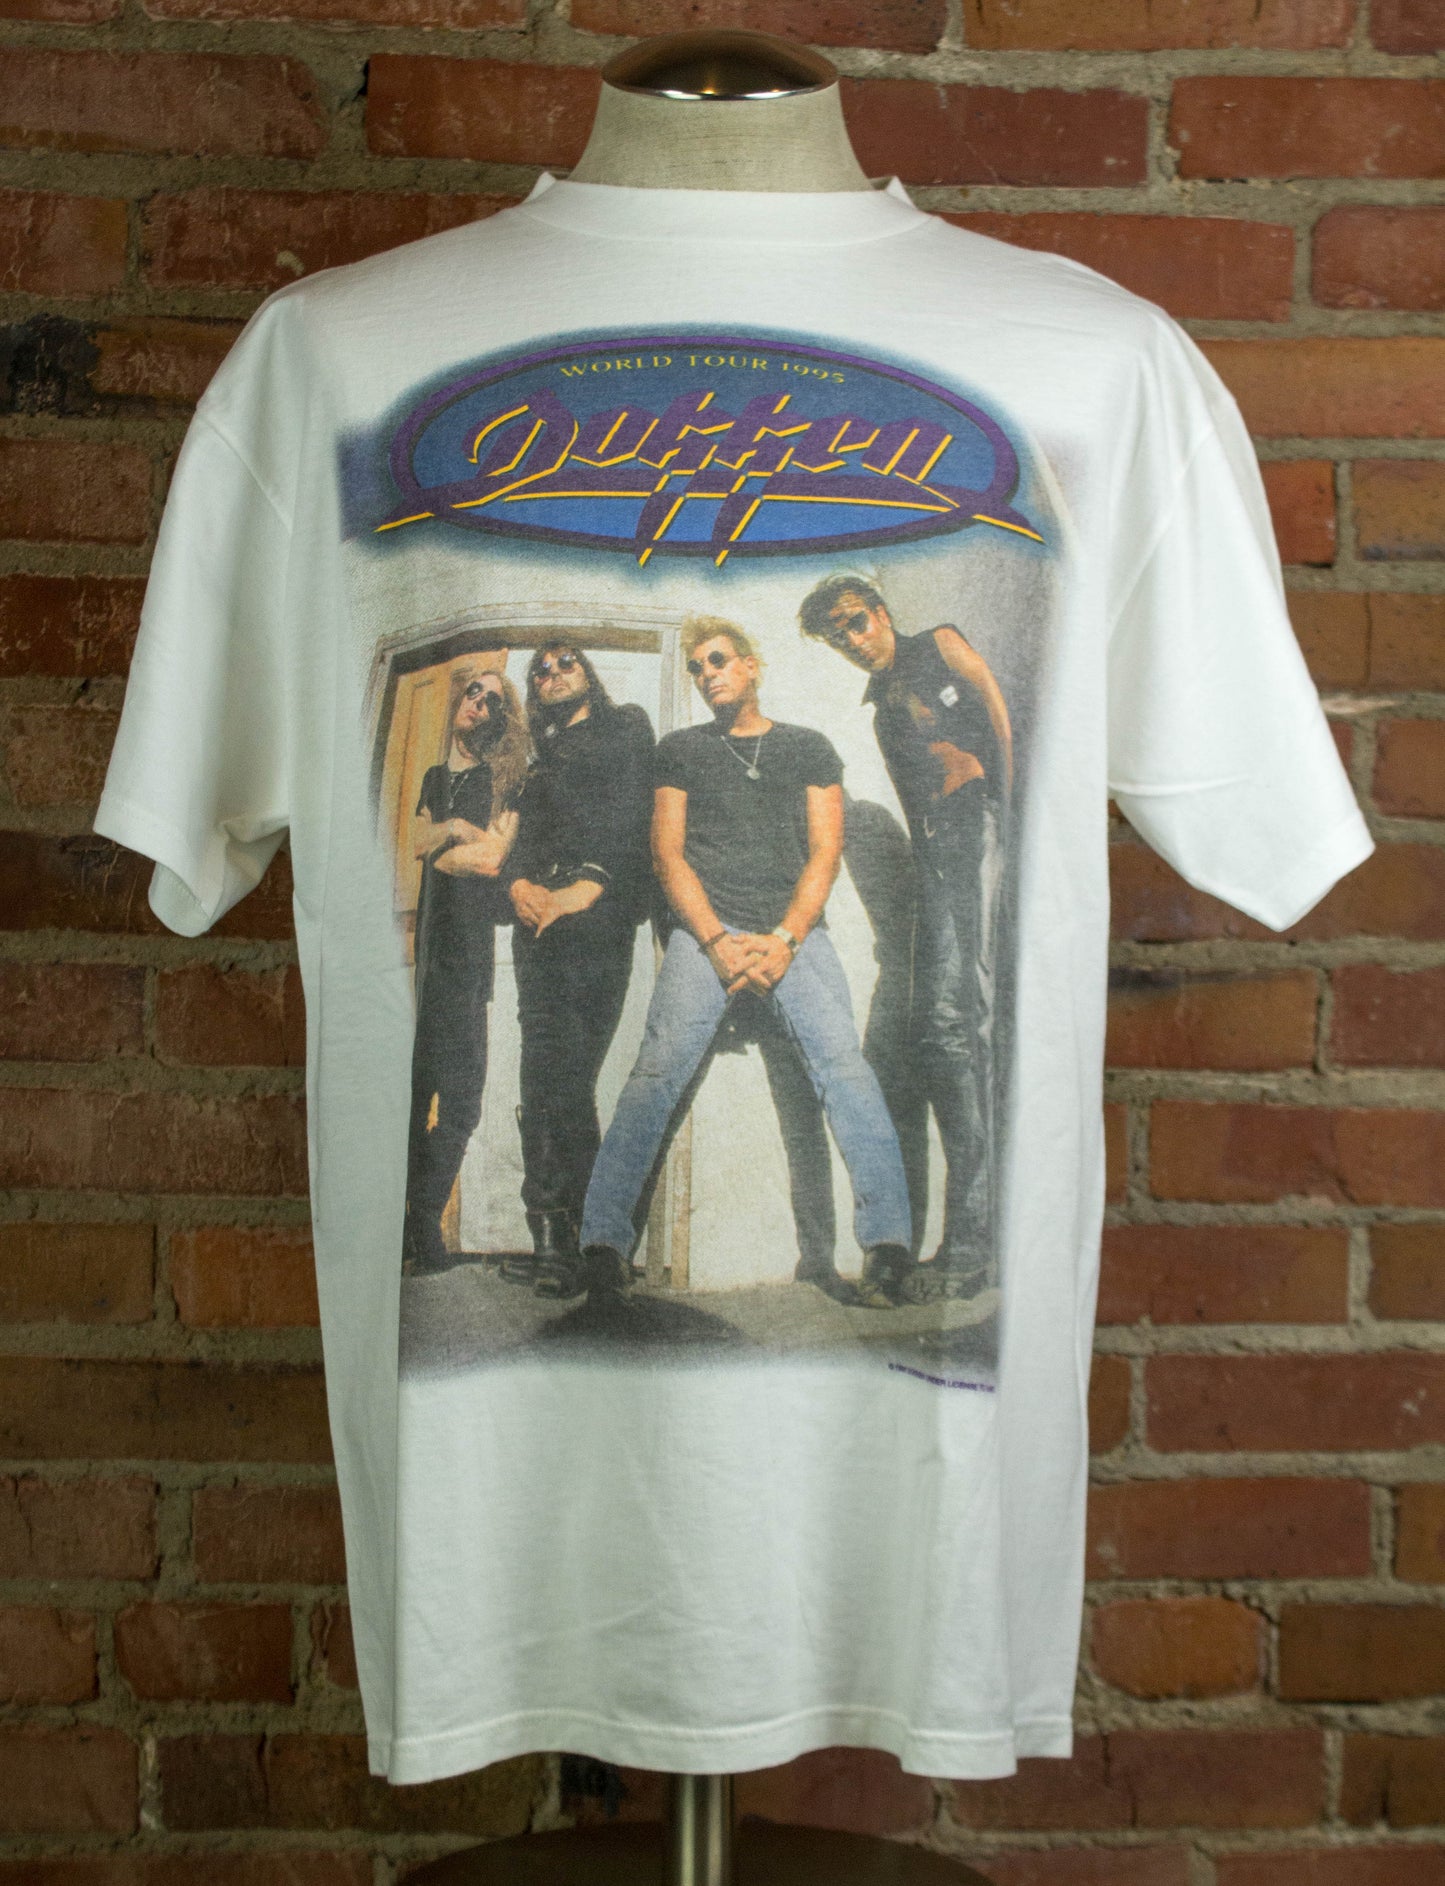 Vintage 1995 Dokken World Tour White Concert T Shirt Unisex XL